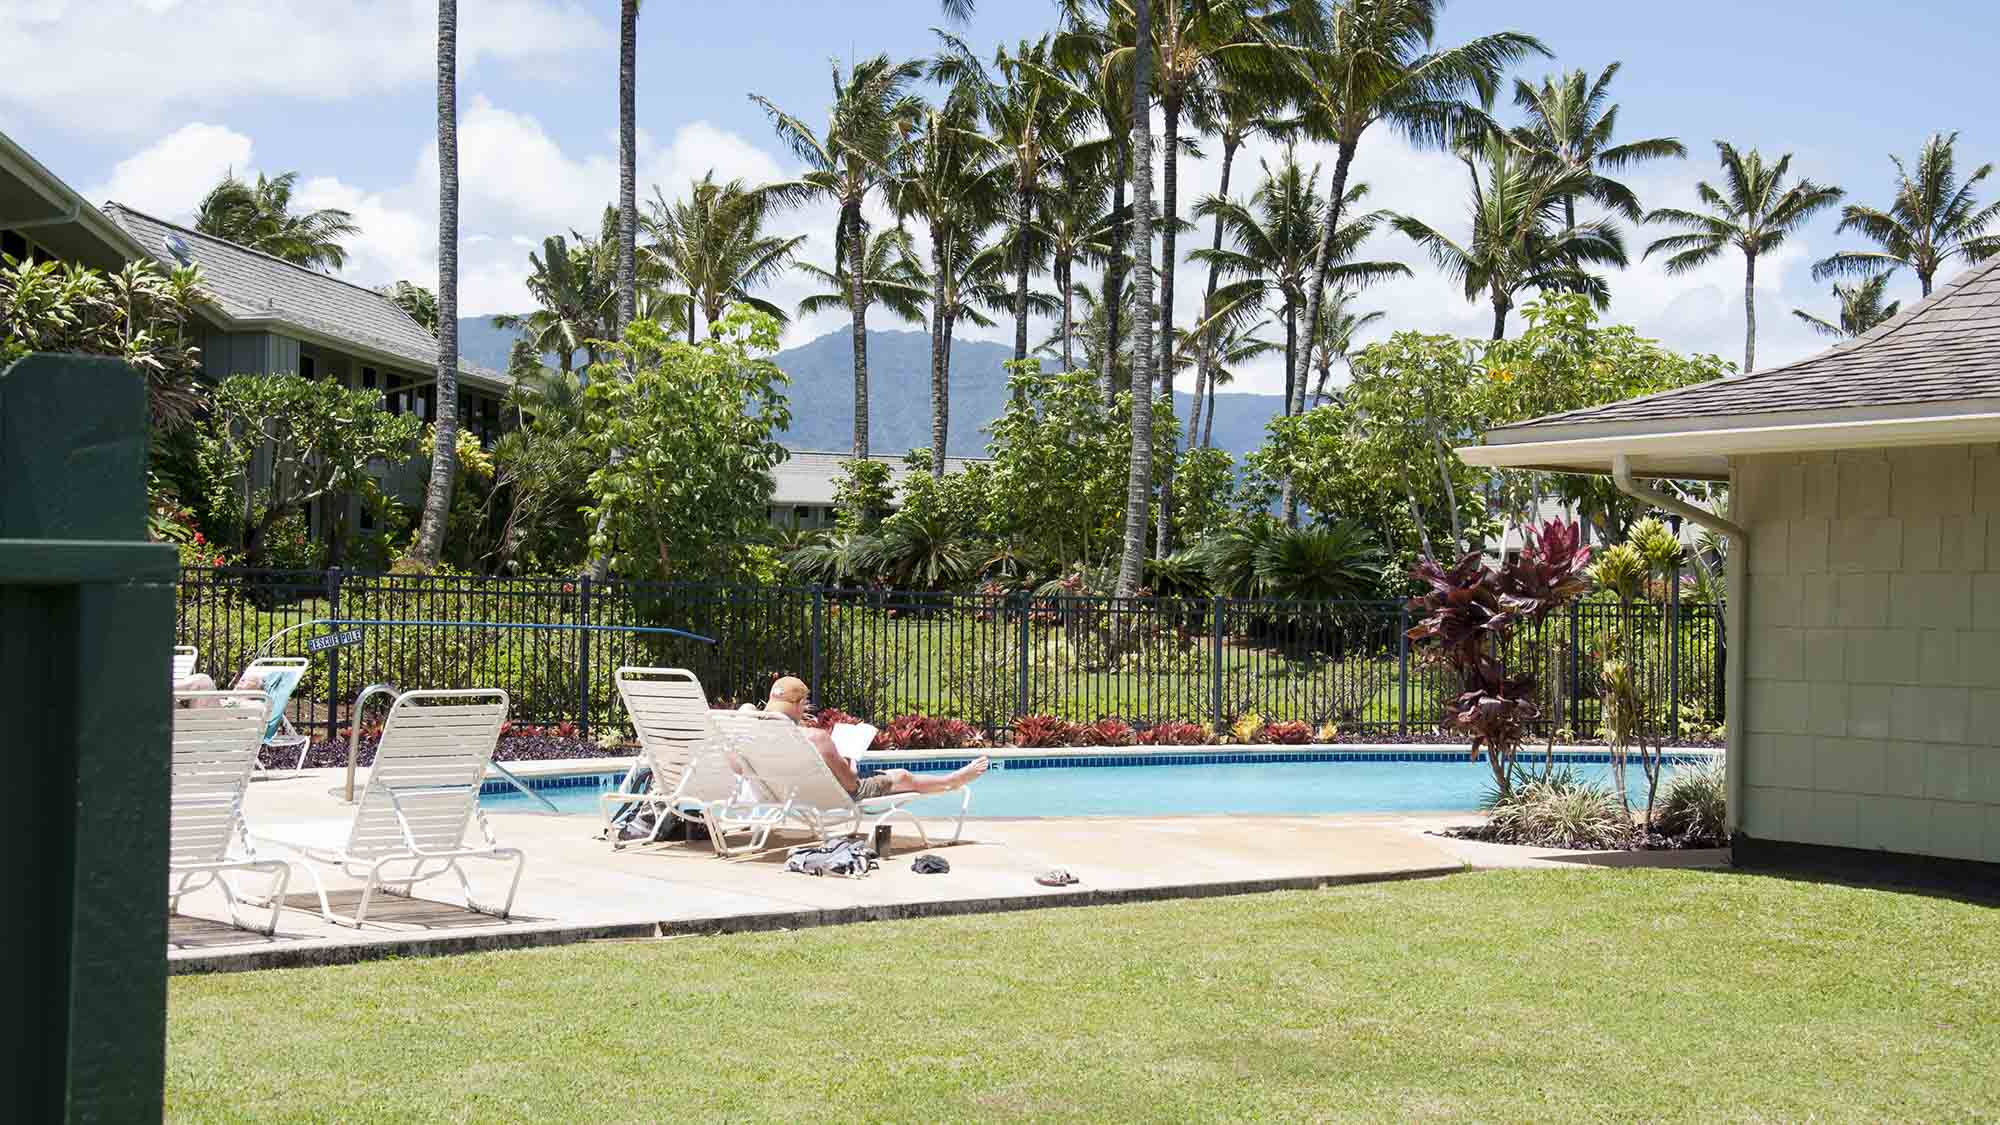 Kai alii princeville kauai resort parrish